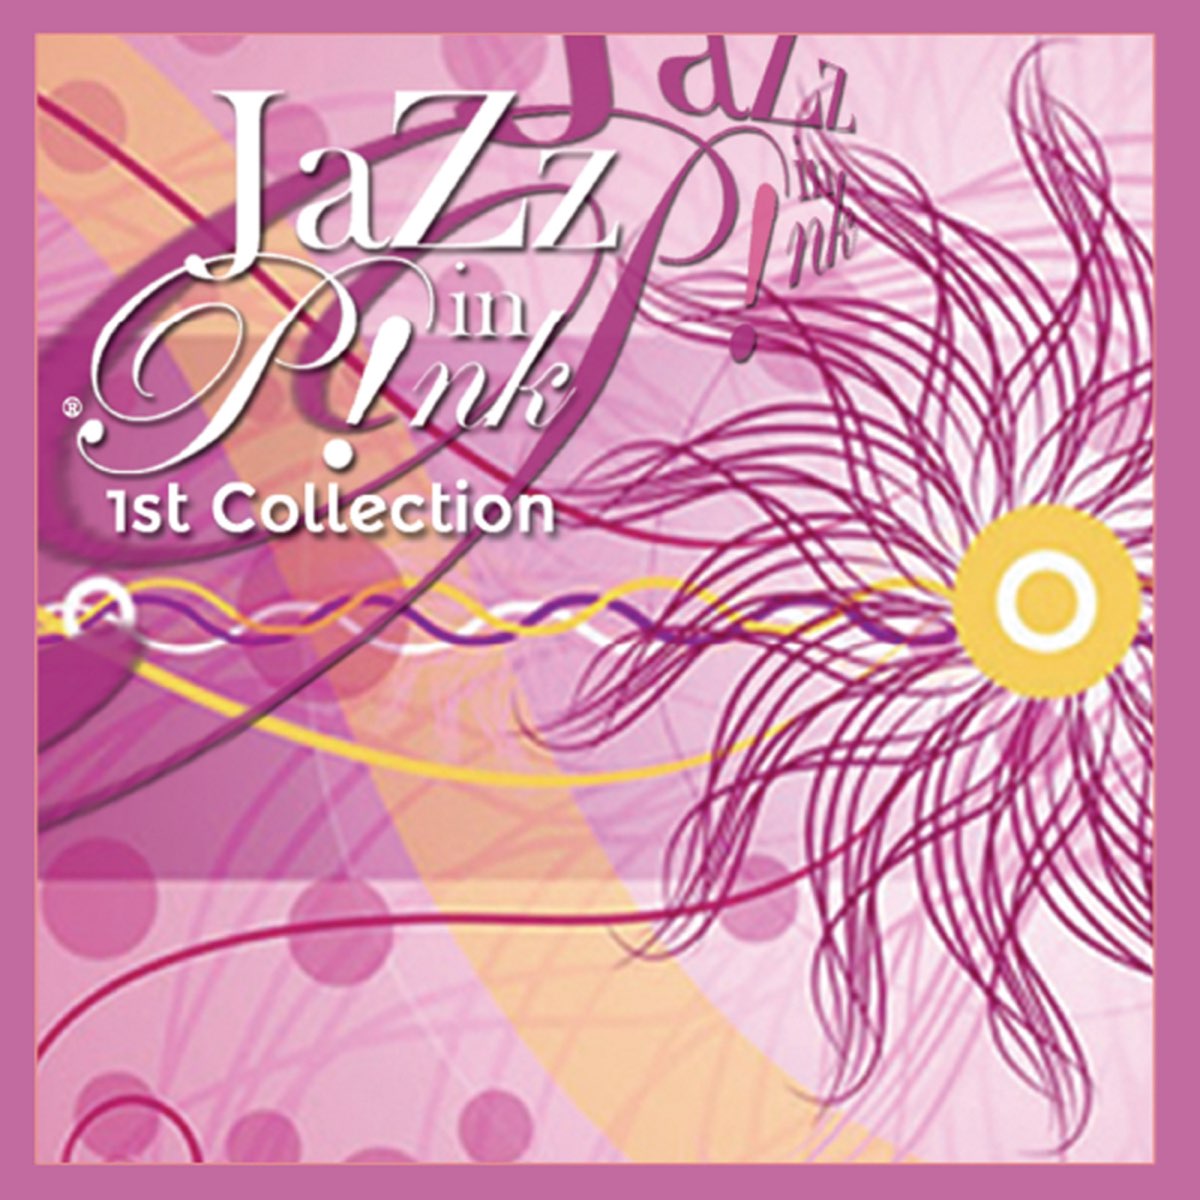 Розовые музыкальные альбомы. Пинк джаз. Pink album with Jazz. In Jazz.